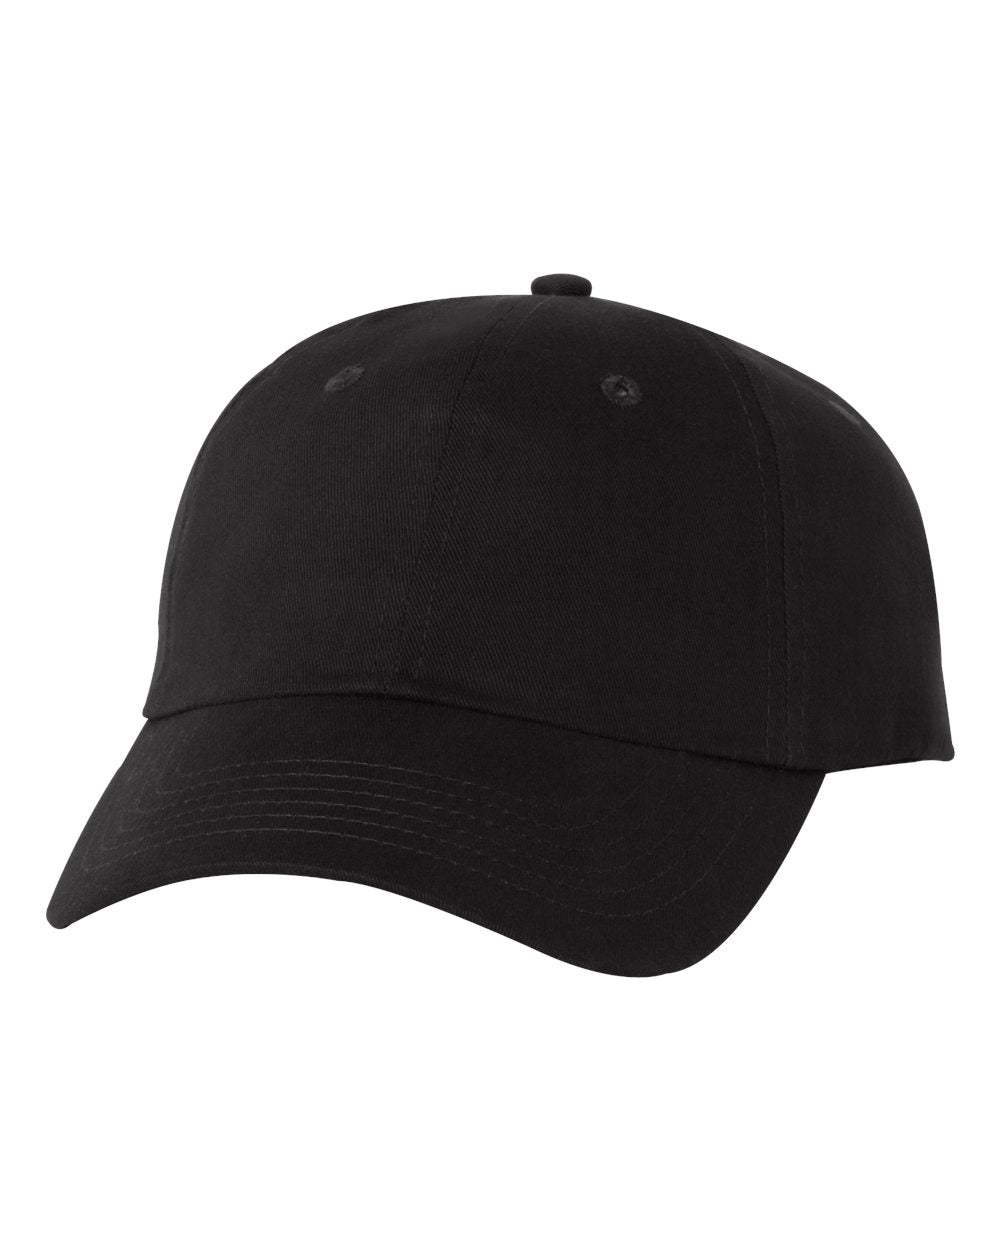 Adult Brushed Twill Cap, Black